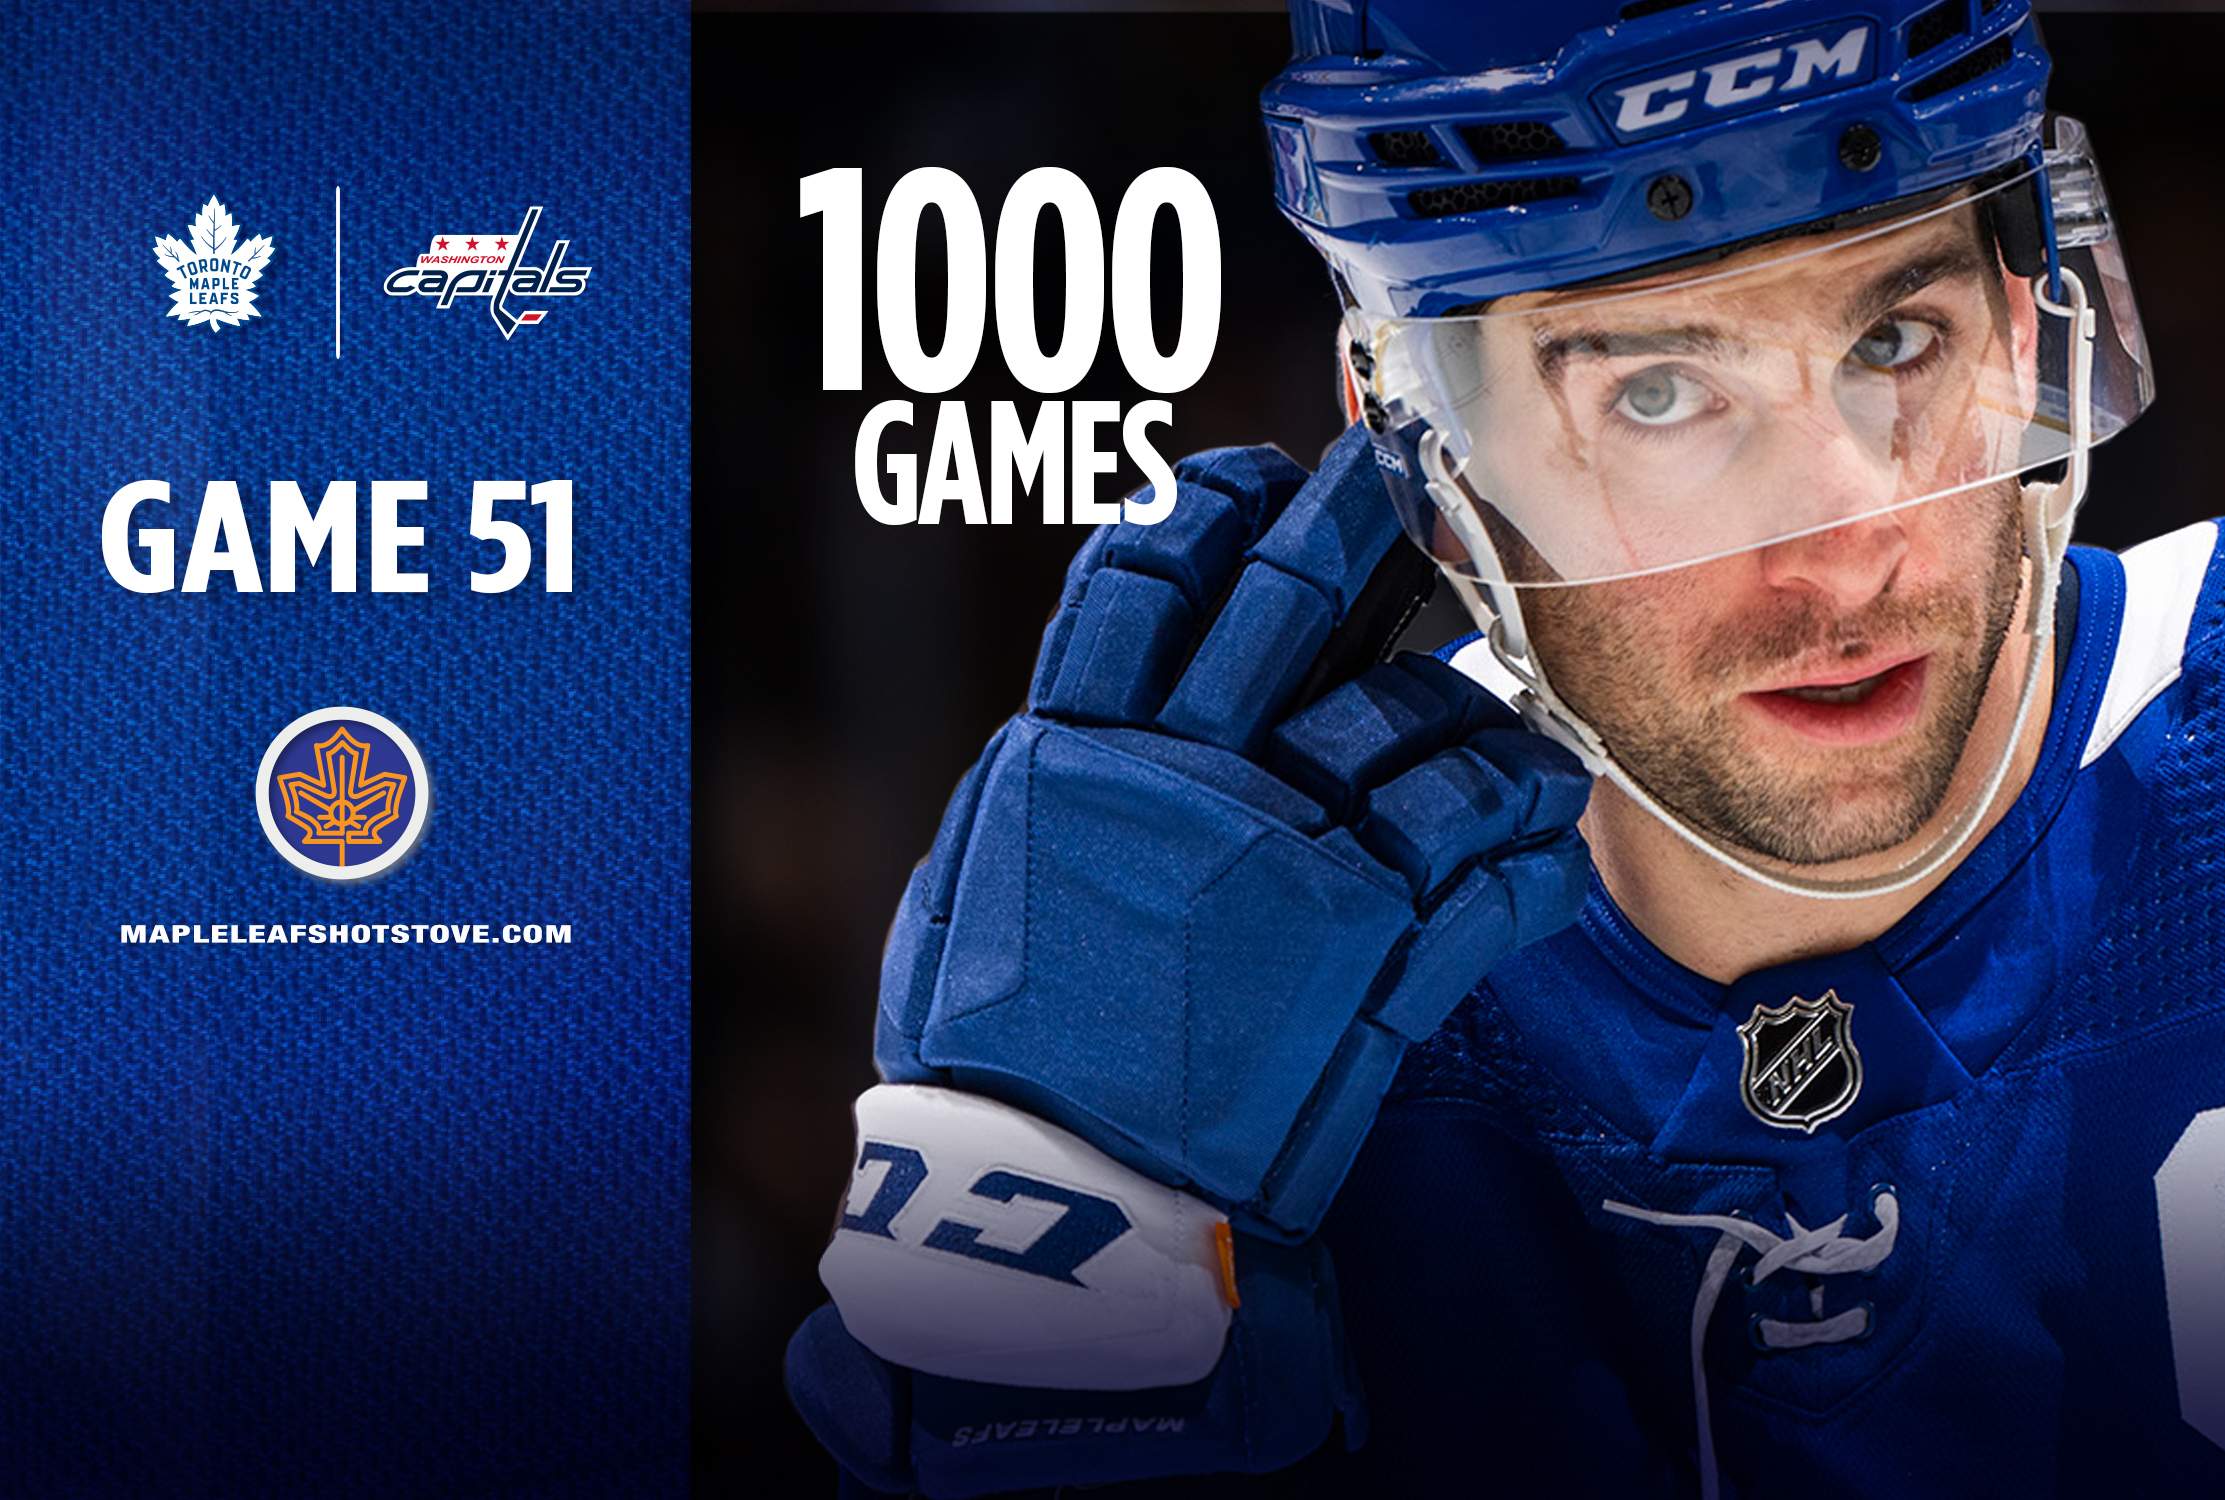 Toronto Maple Leafs vs. Washington Capitals, John Tavares 1,000 games